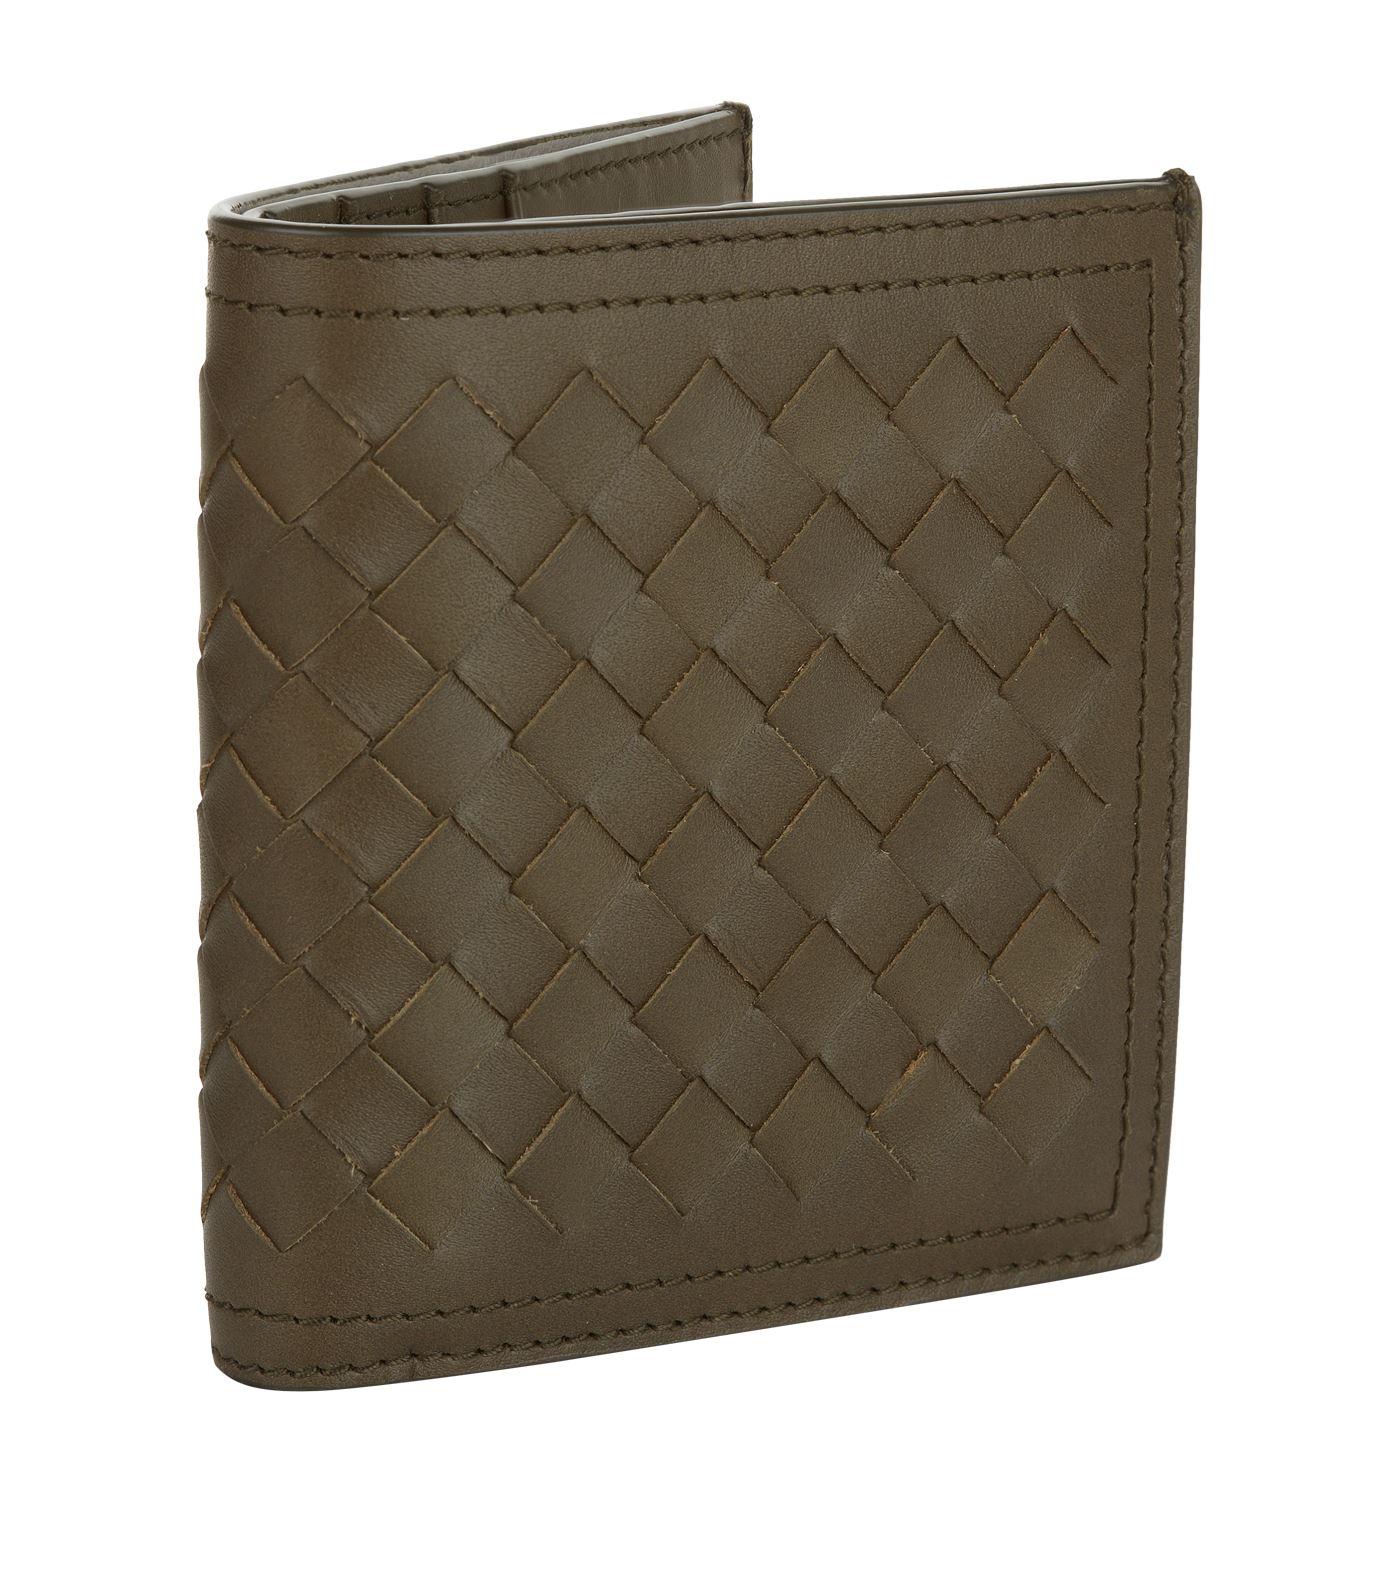 Lyst - Bottega Veneta Intrecciato Weave Leather Bifold Wallet in Brown ...